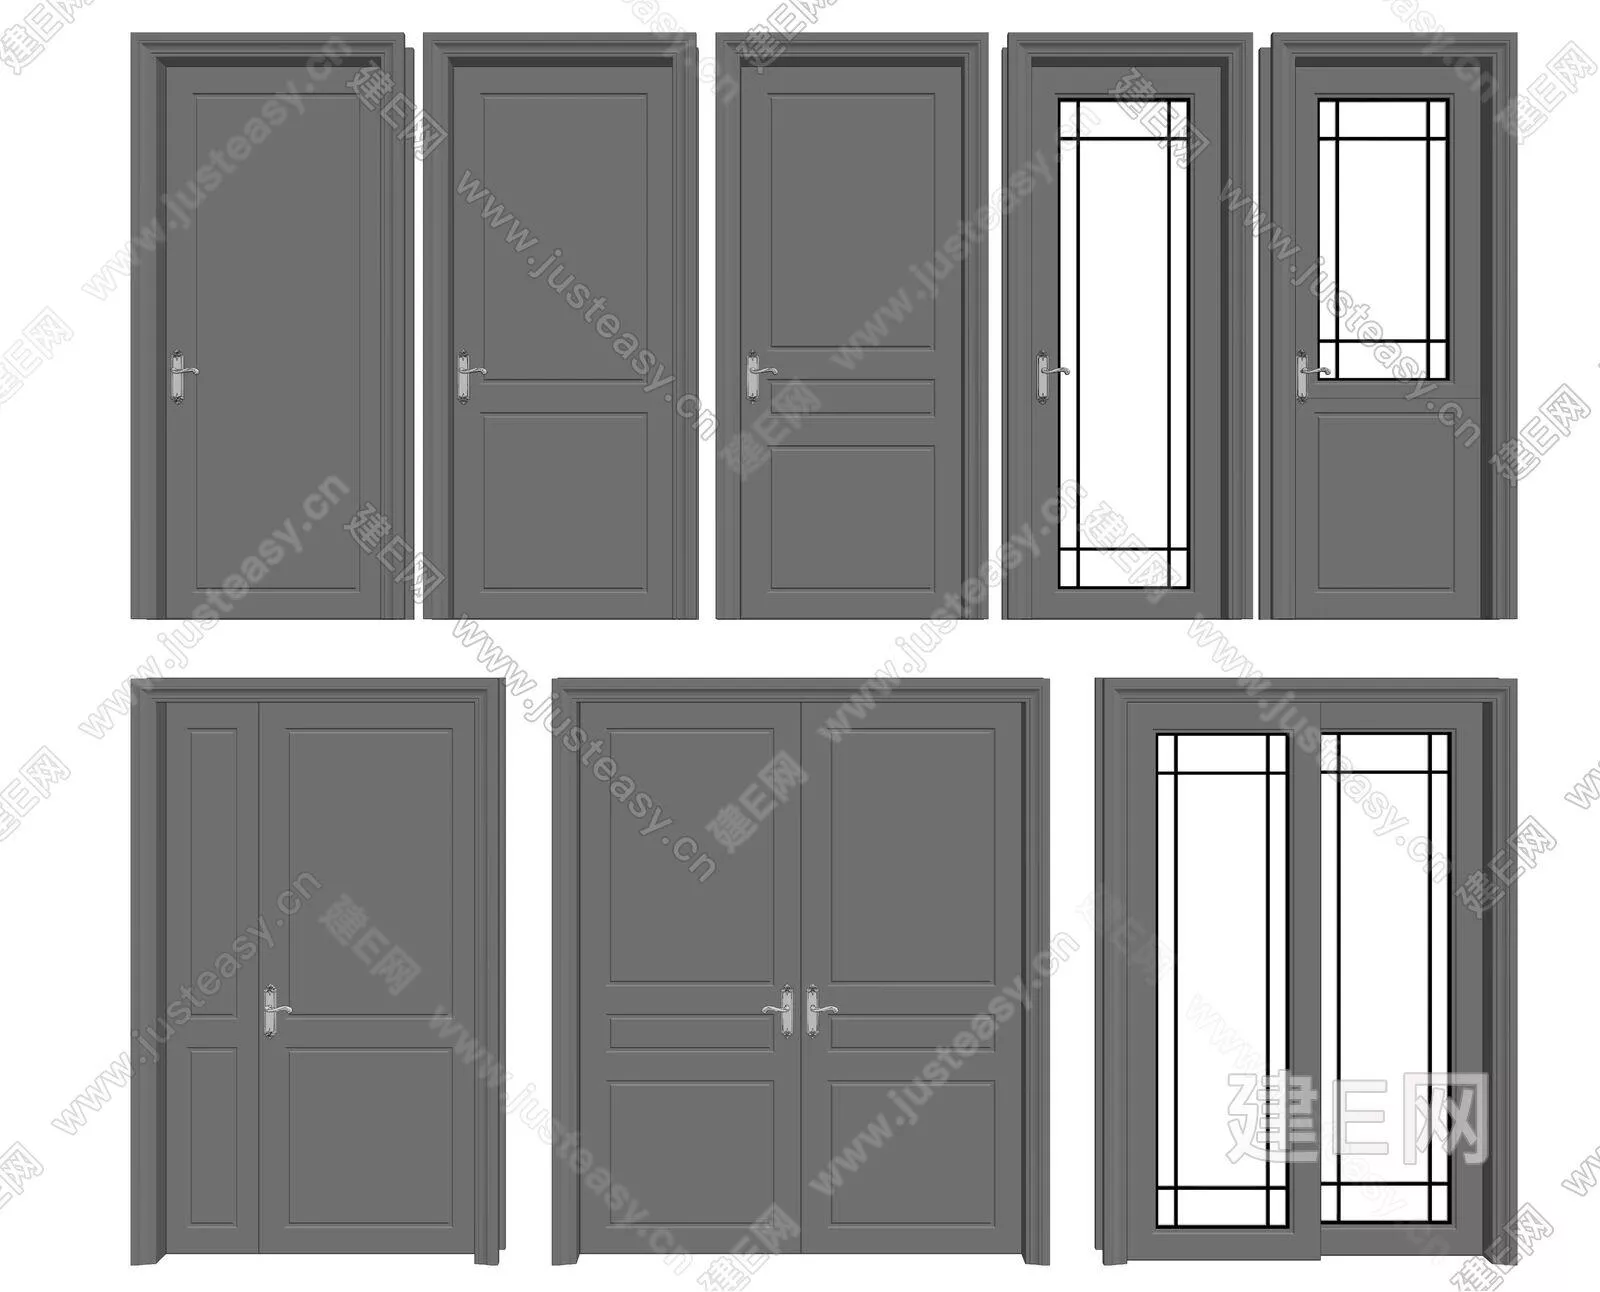 MODERN DOOR AND WINDOWS - SKETCHUP 3D MODEL - ENSCAPE - 111755692